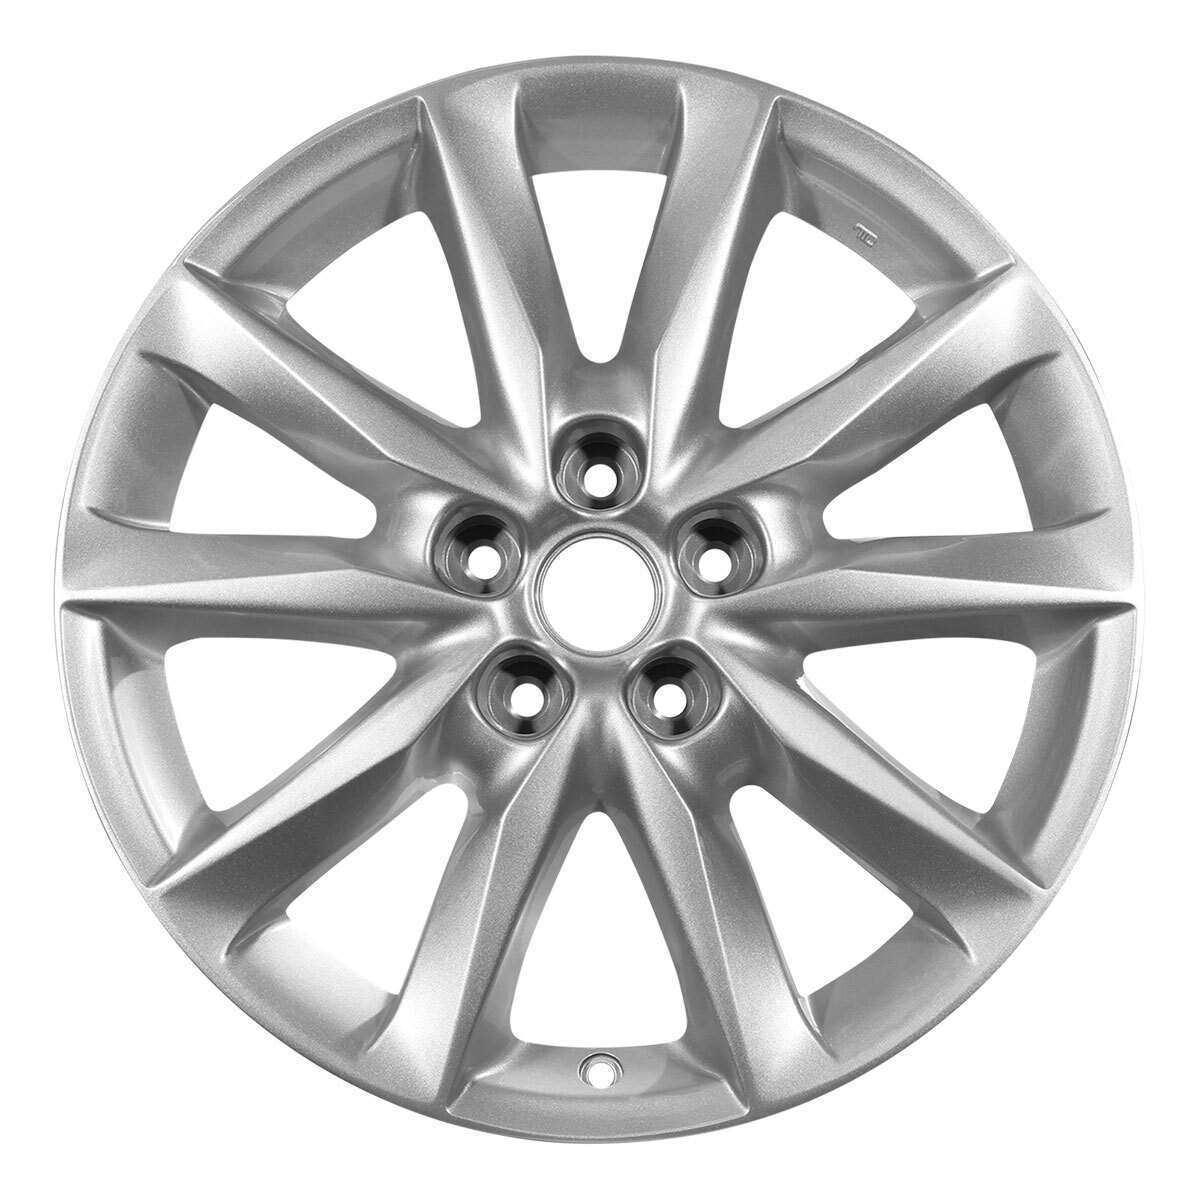 2018 Mazda 3 New 18" Replacement Wheel Rim RW64940S